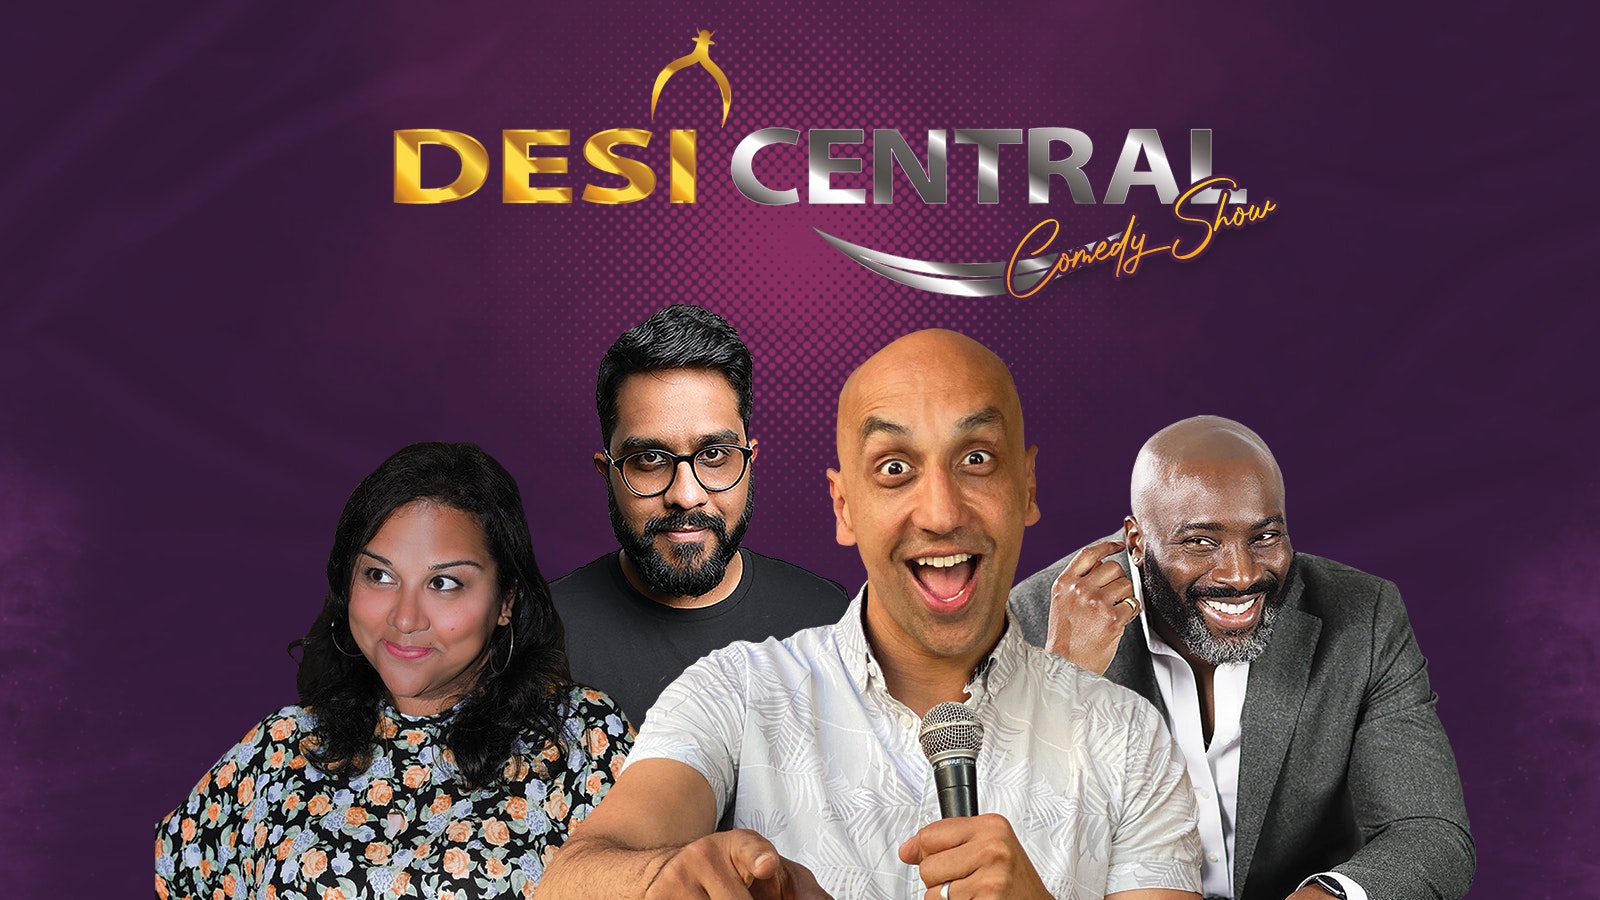 Desi Central Comedy Show – Manchester